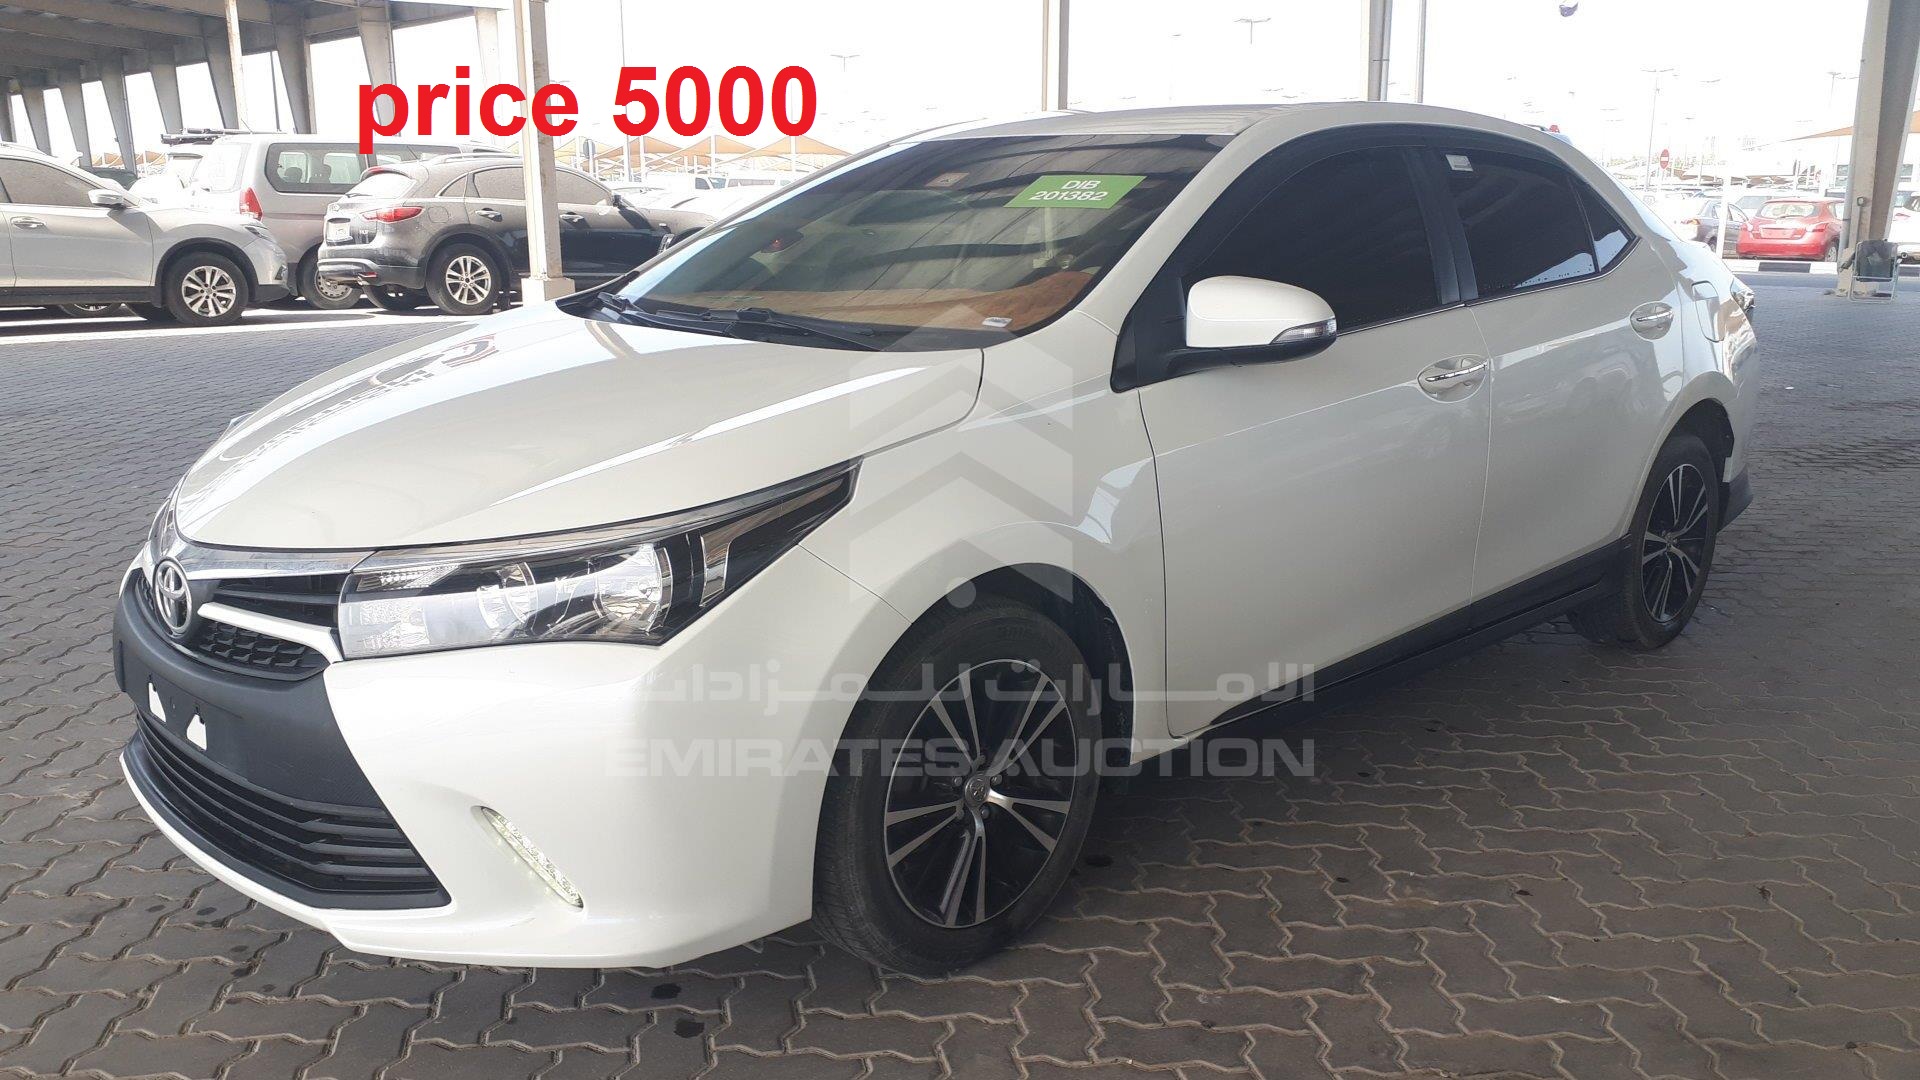 price 6000 alfahd corolla cars auction